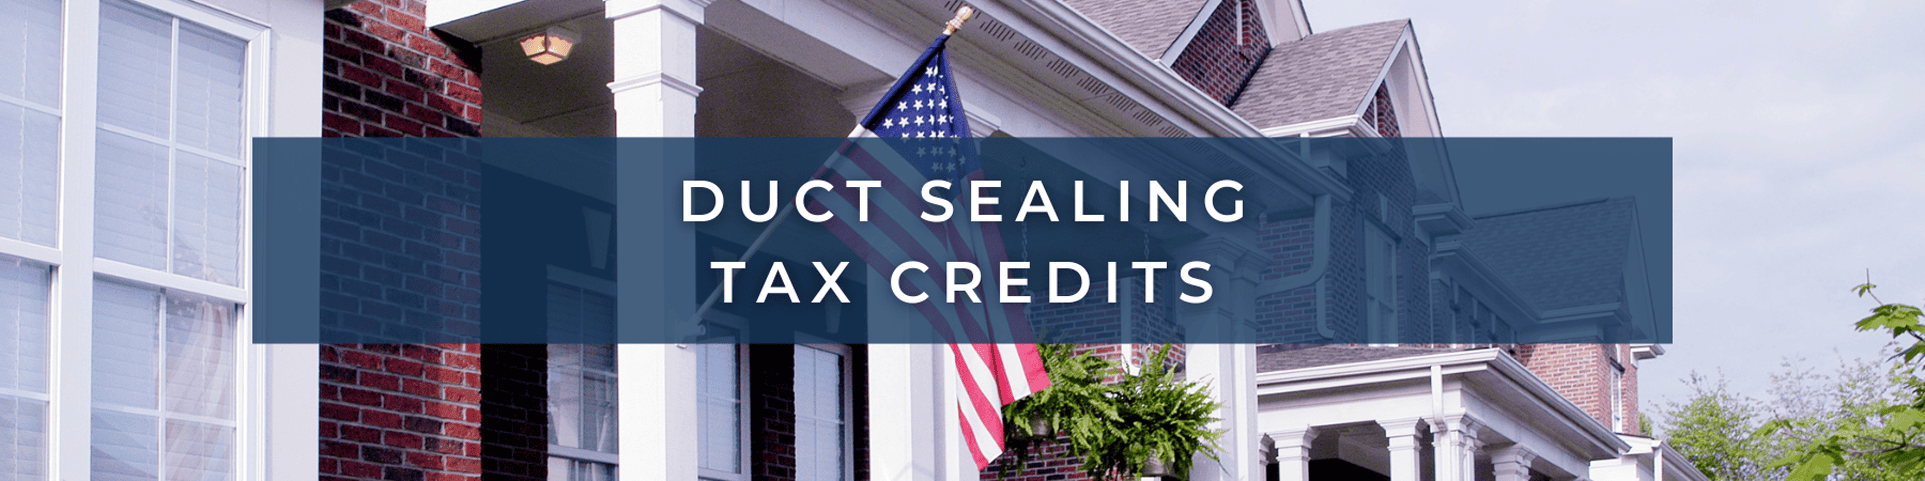 Duct Sealing Tax Credits